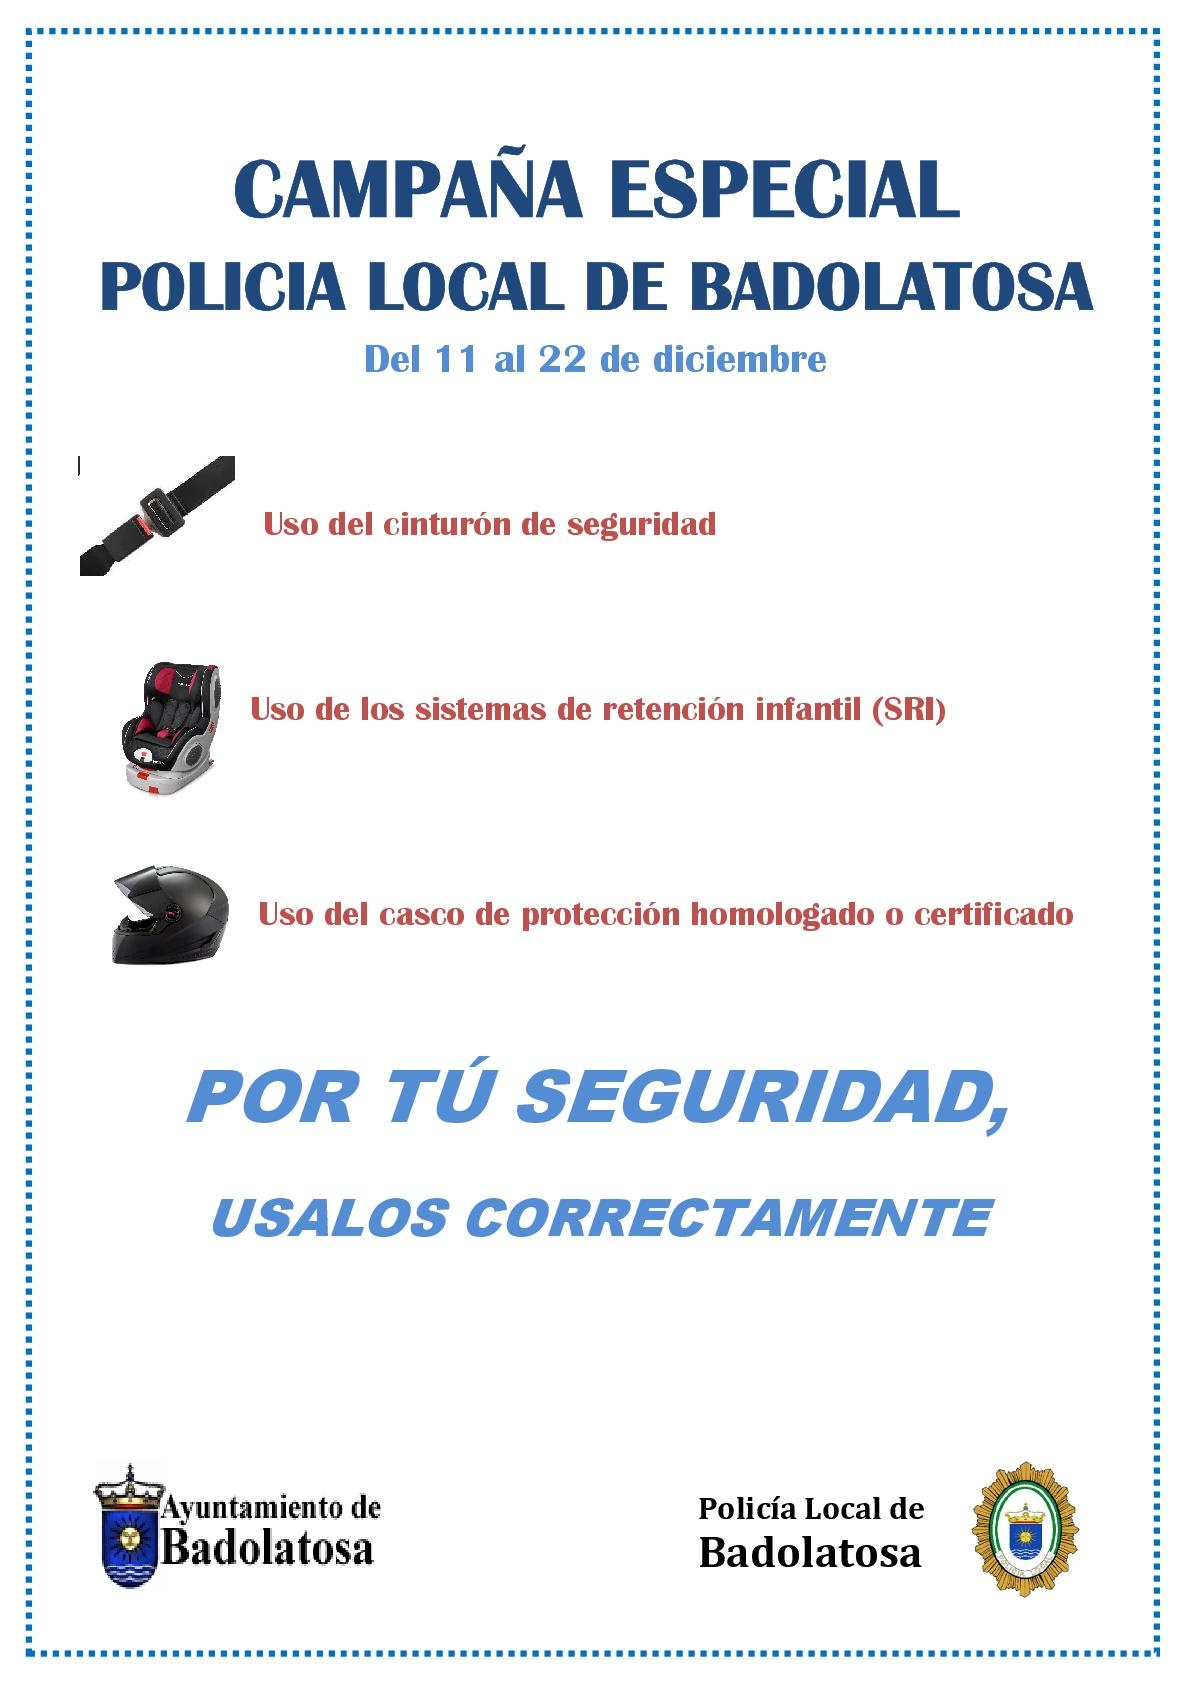 CARTEL CAMPAÑA ESPECIAL POLICIA LOCAL DE BADOLATOSA DICIEMBRE 2023 - CINTURON, SRI Y CASCO-001